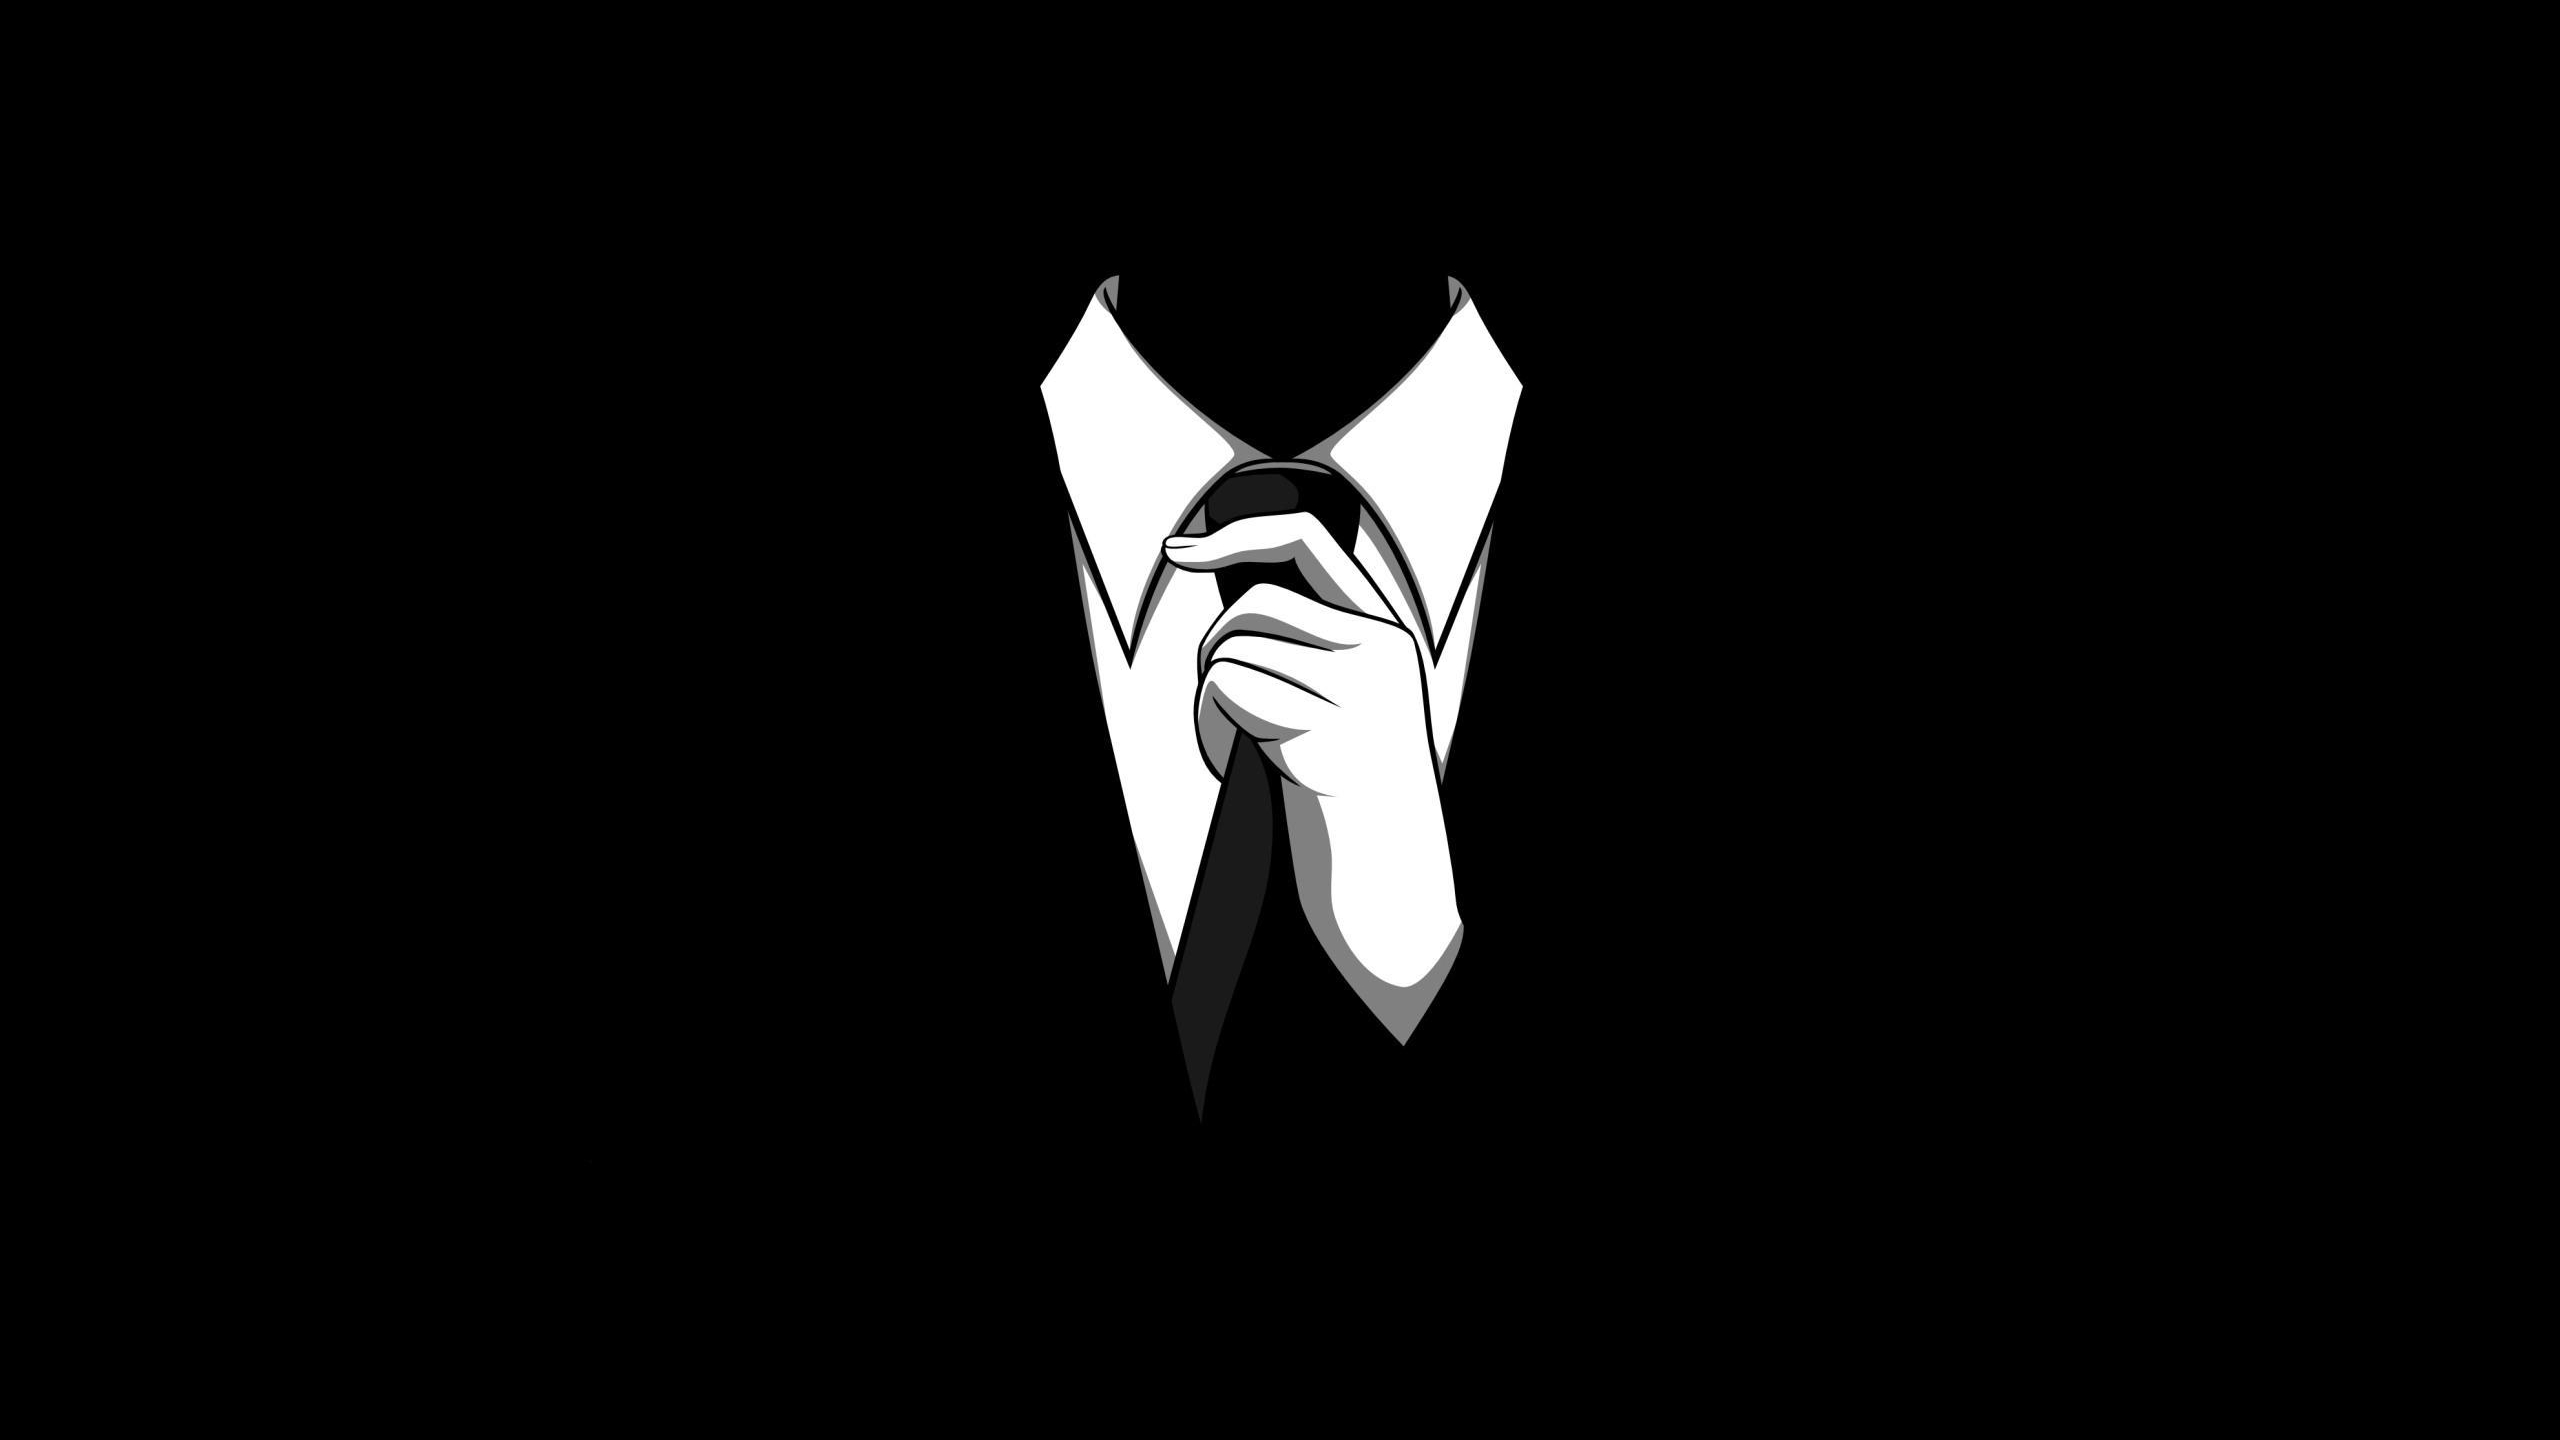 Anonymous black tie monochrome black background wallpaper 2560x1440